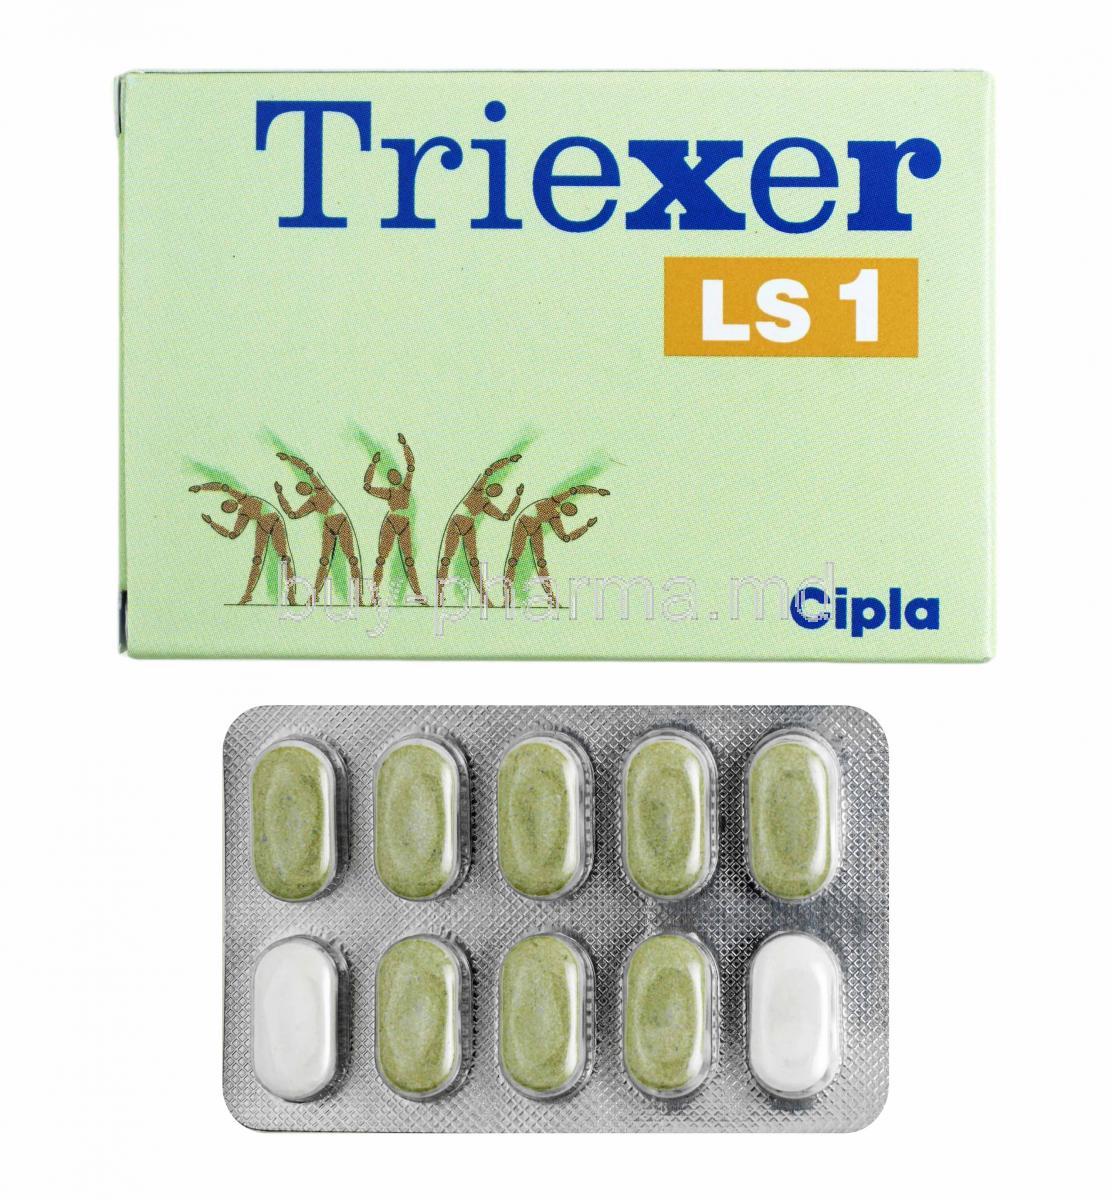 Triexer LS, Glimepiride 1mg, Metformin 500mg and Pioglitazone 7.5mg box and tablets